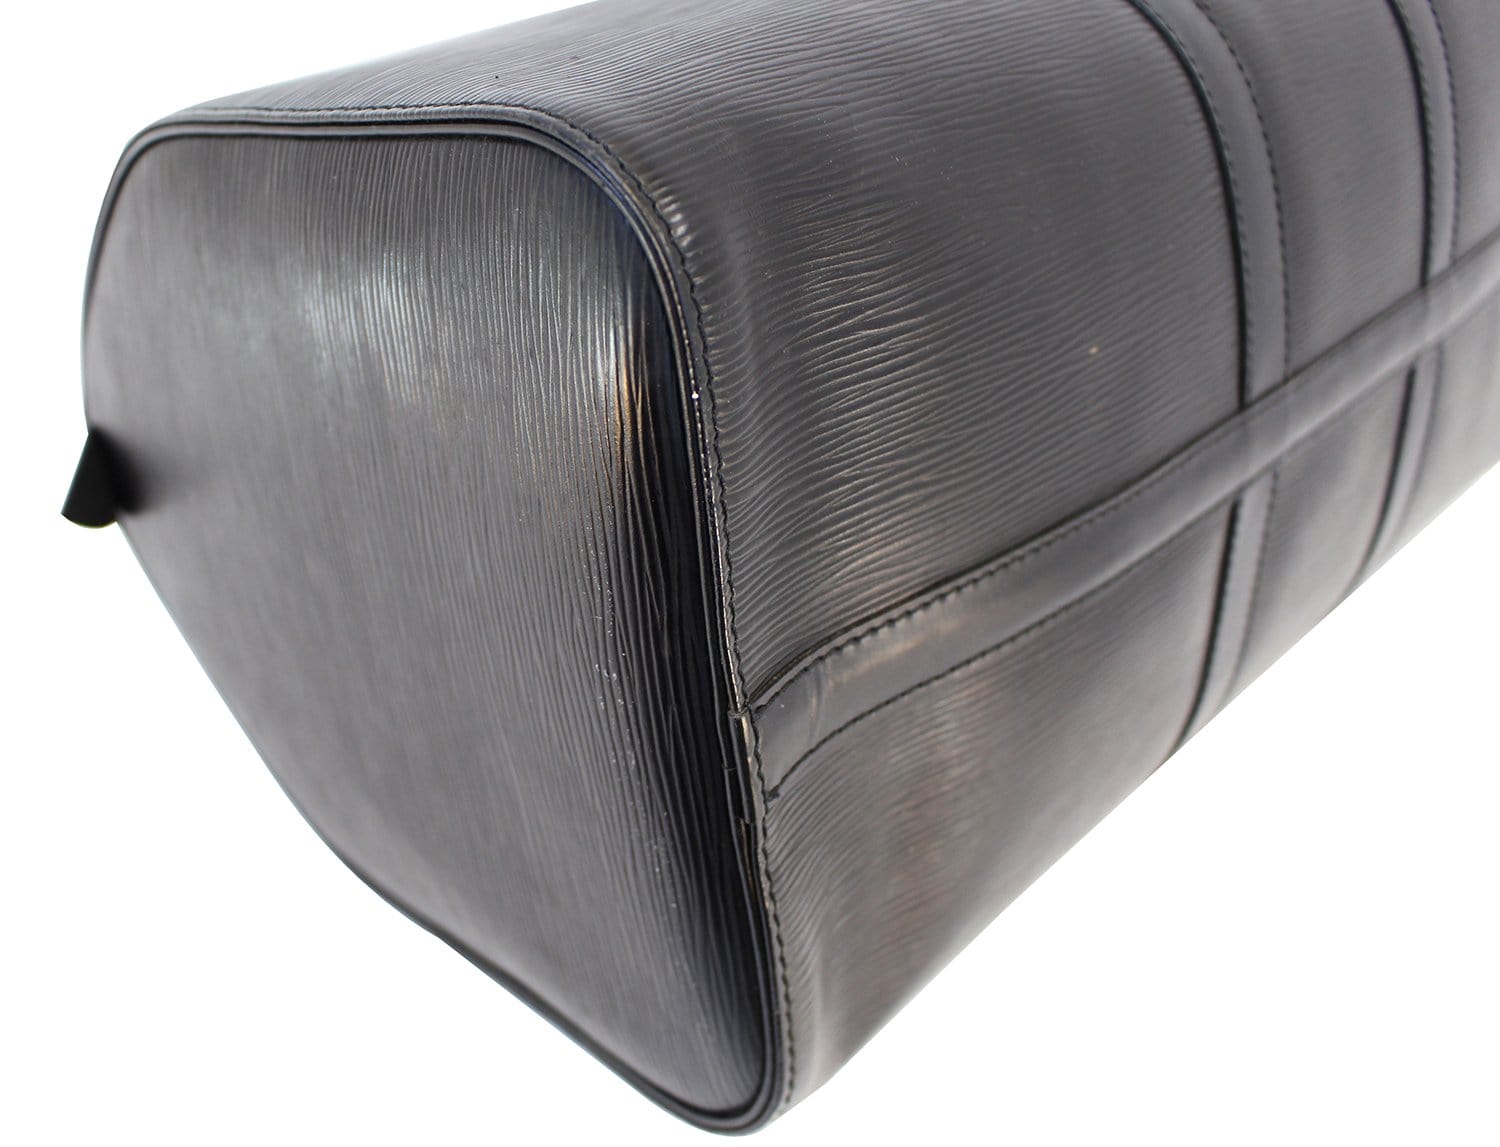 Louis Vuitton Blue EPI Leather Toledo Keepall 45 Boston Duffle Bag 22LV106